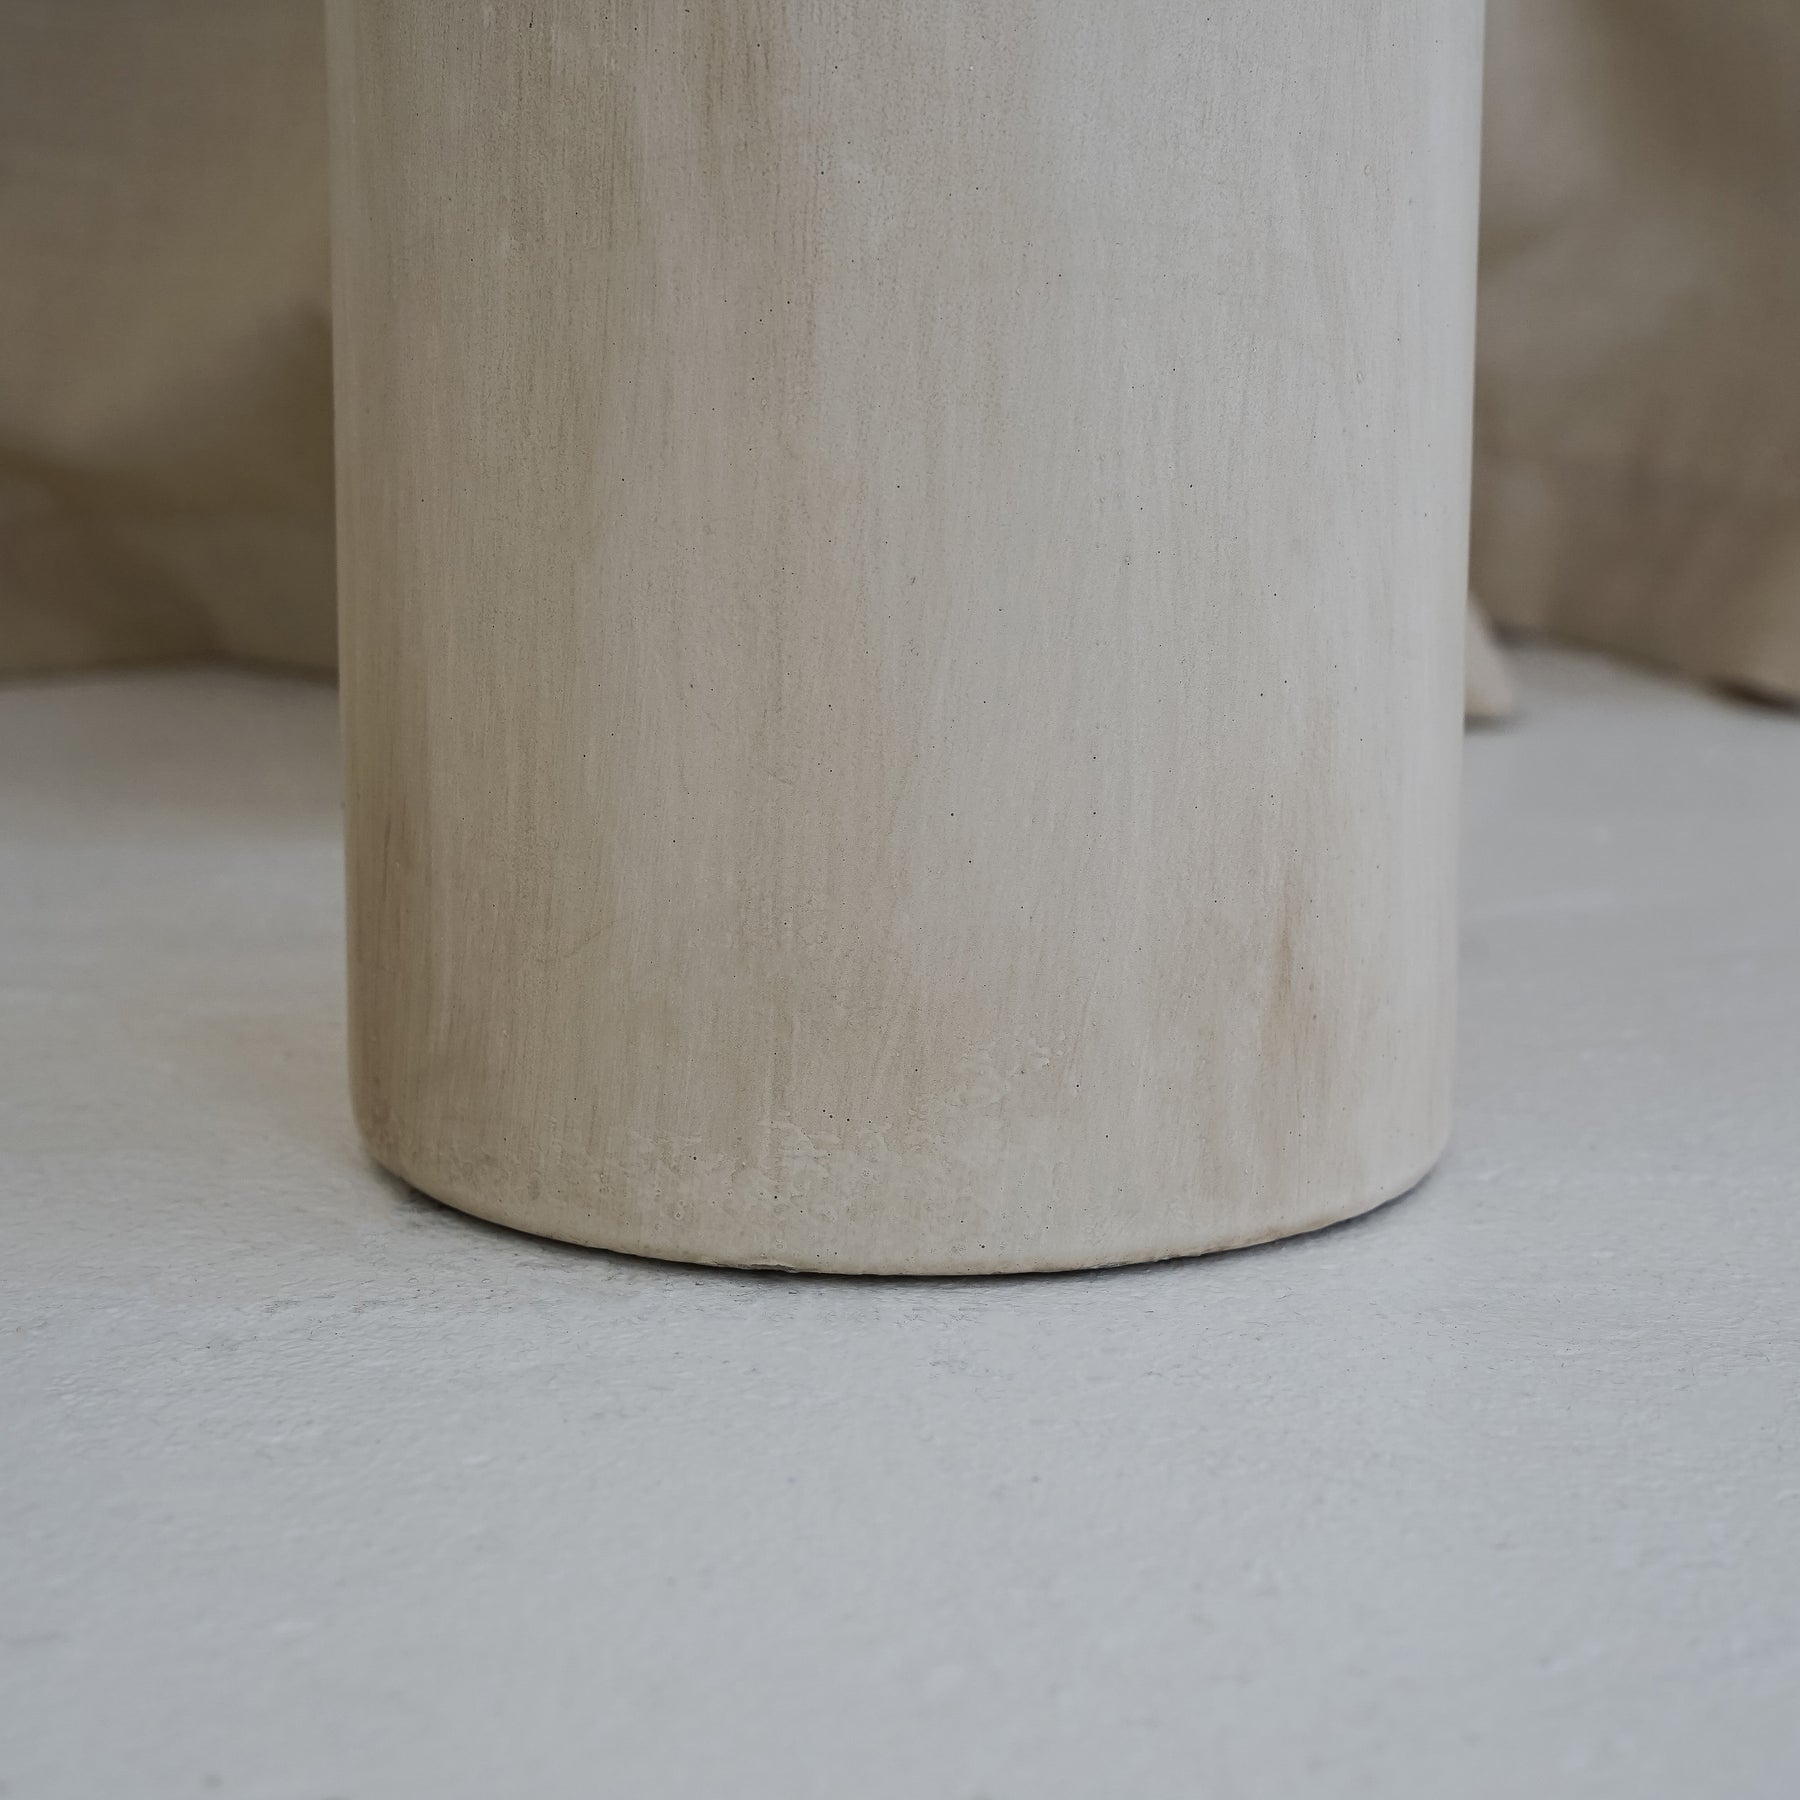 Beige textured ceramic small vase detail shot of base